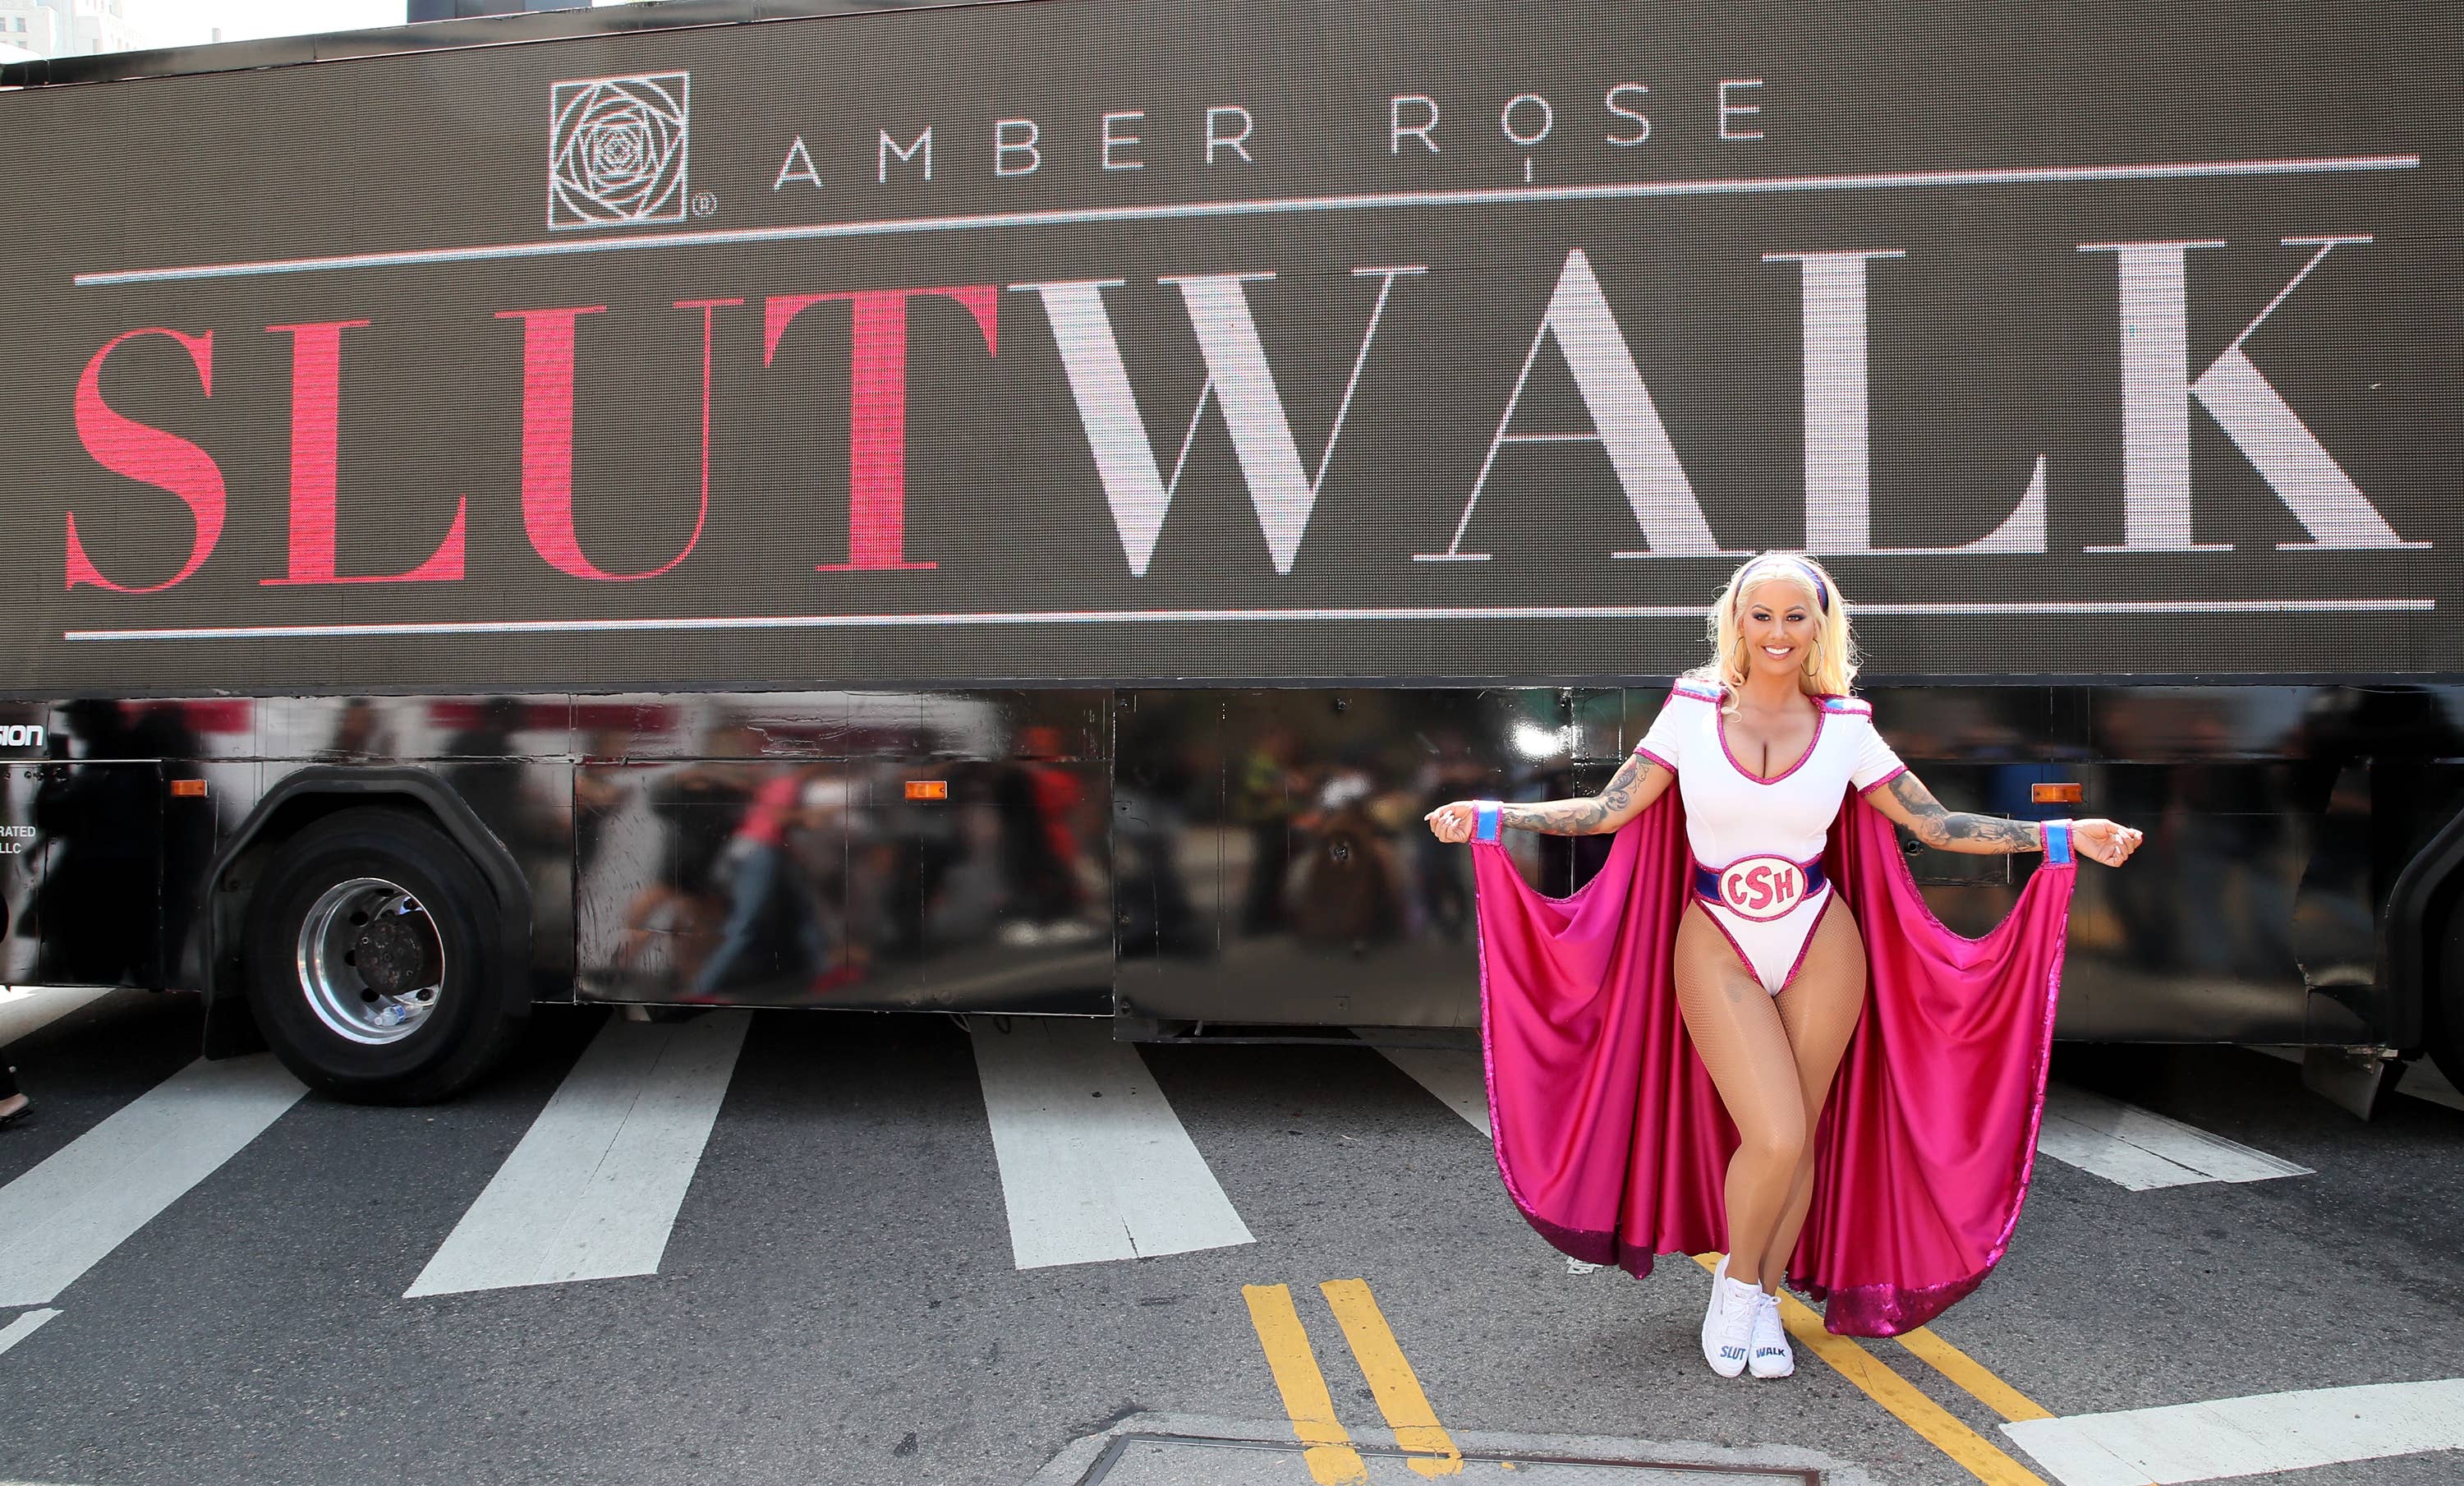 Amber Rose's Slutwalk